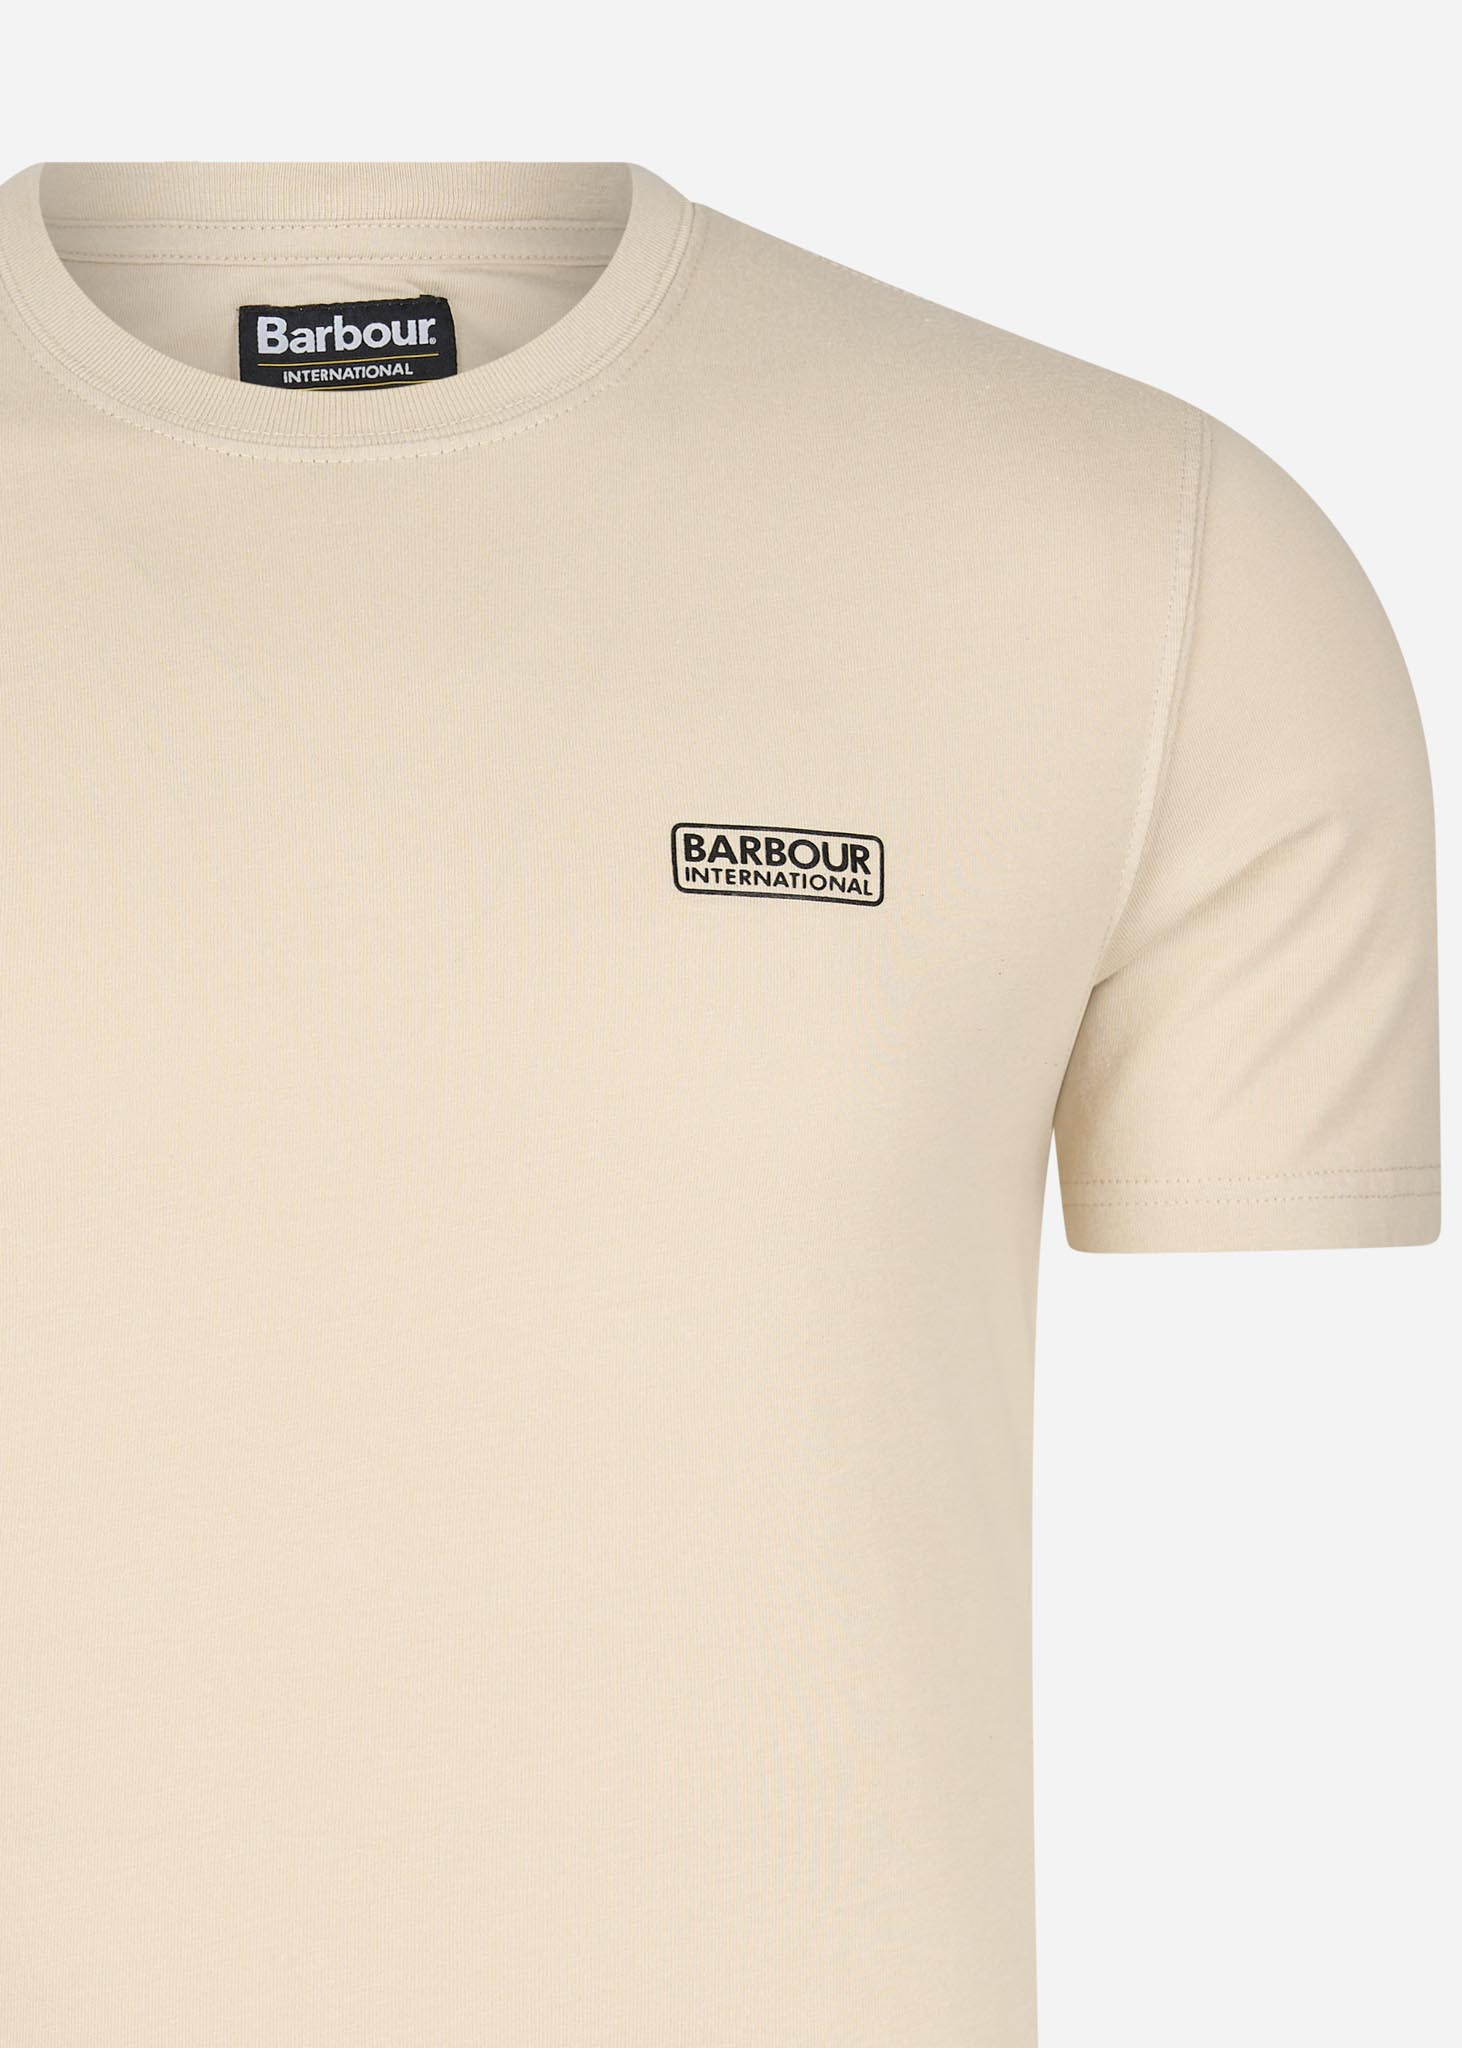 Barbour International T-shirts  Small logo tee - mist 